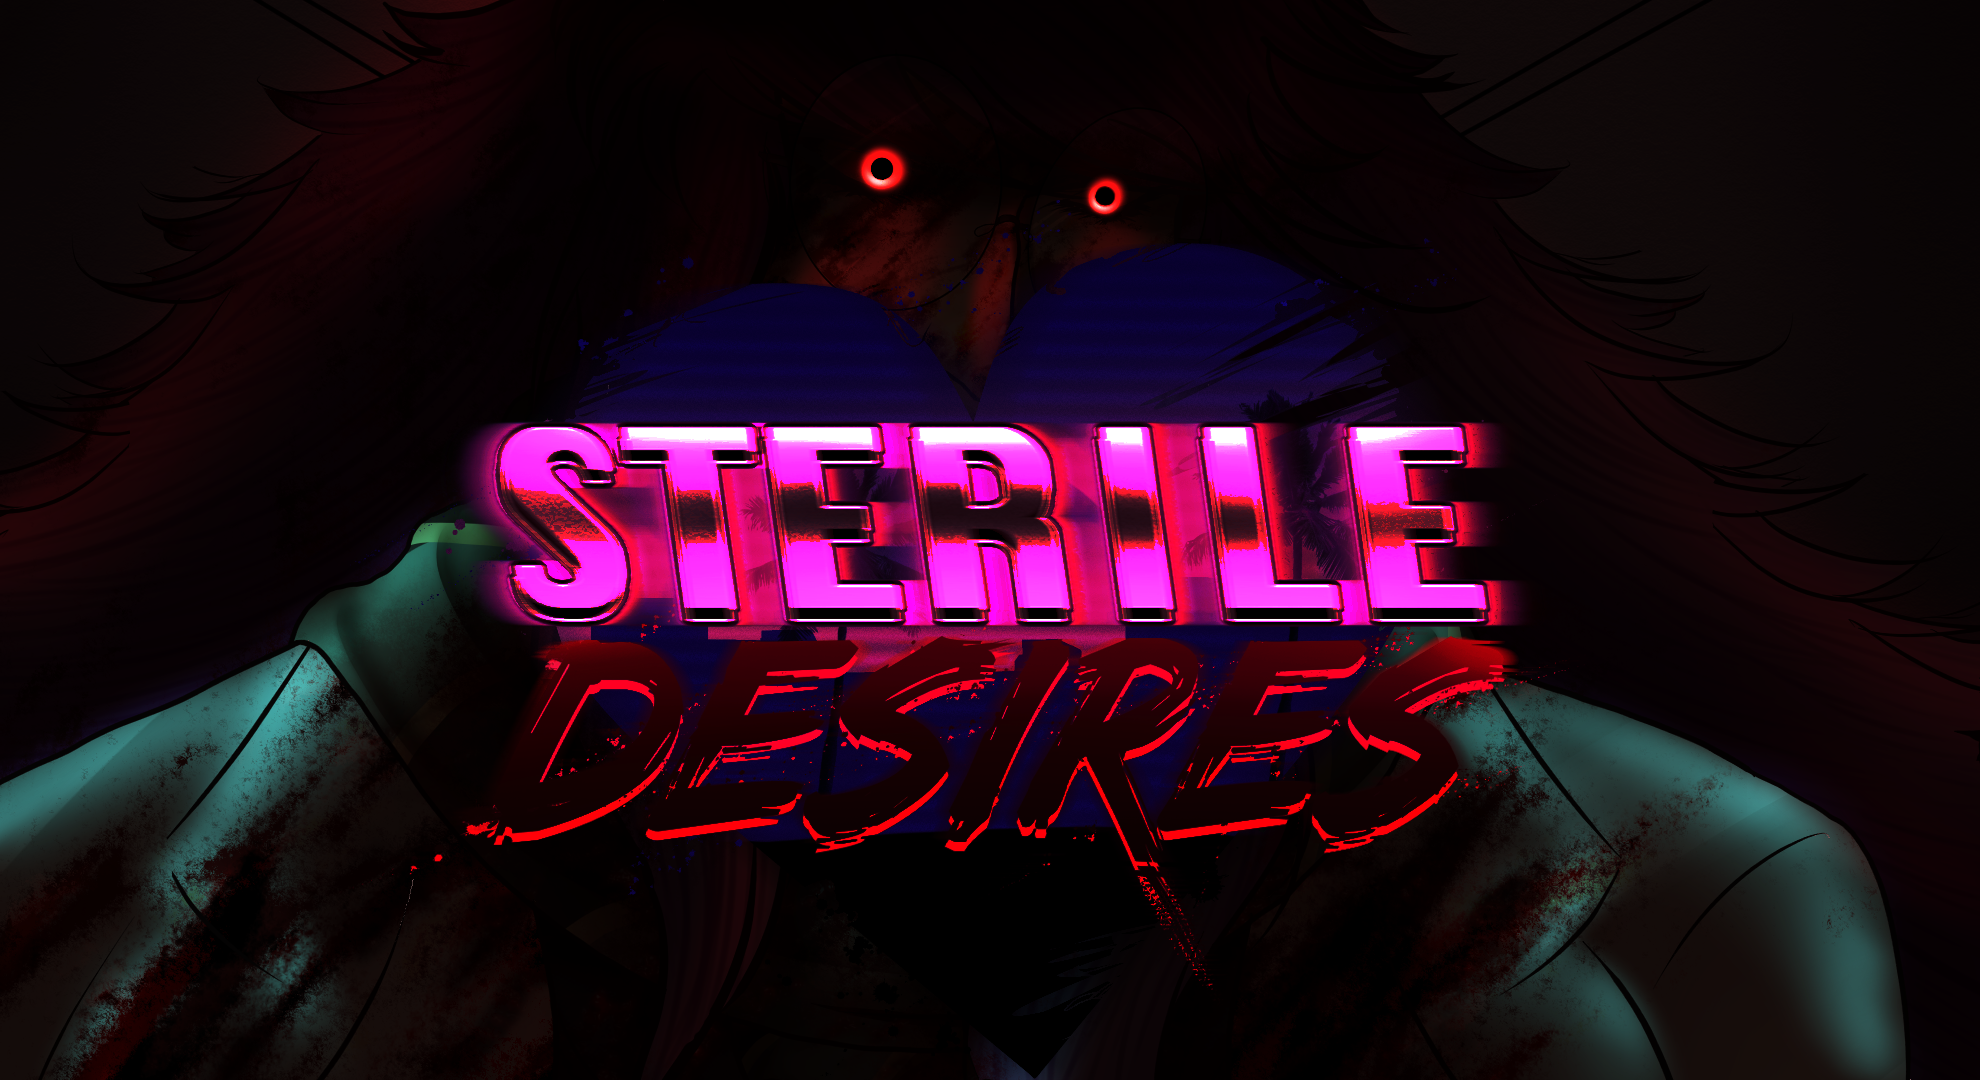 Sterile Desires